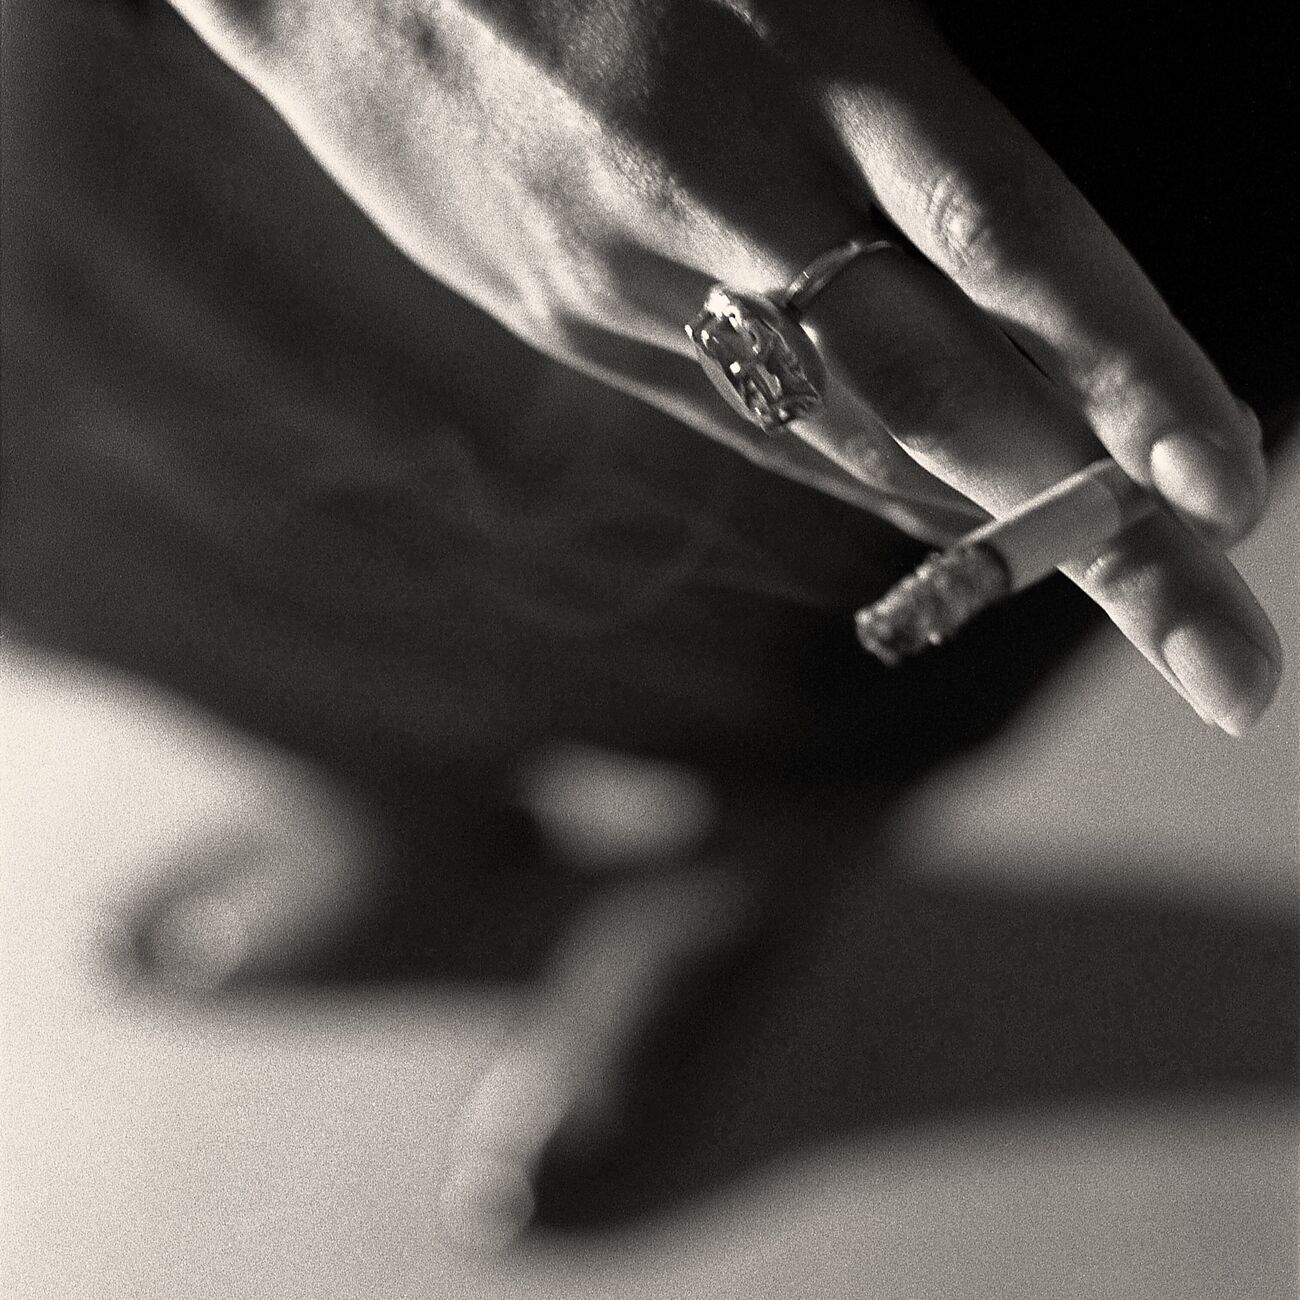 Cigarette, Poitiers, France. April 1991. Ref-823 - Denis Olivier Photography